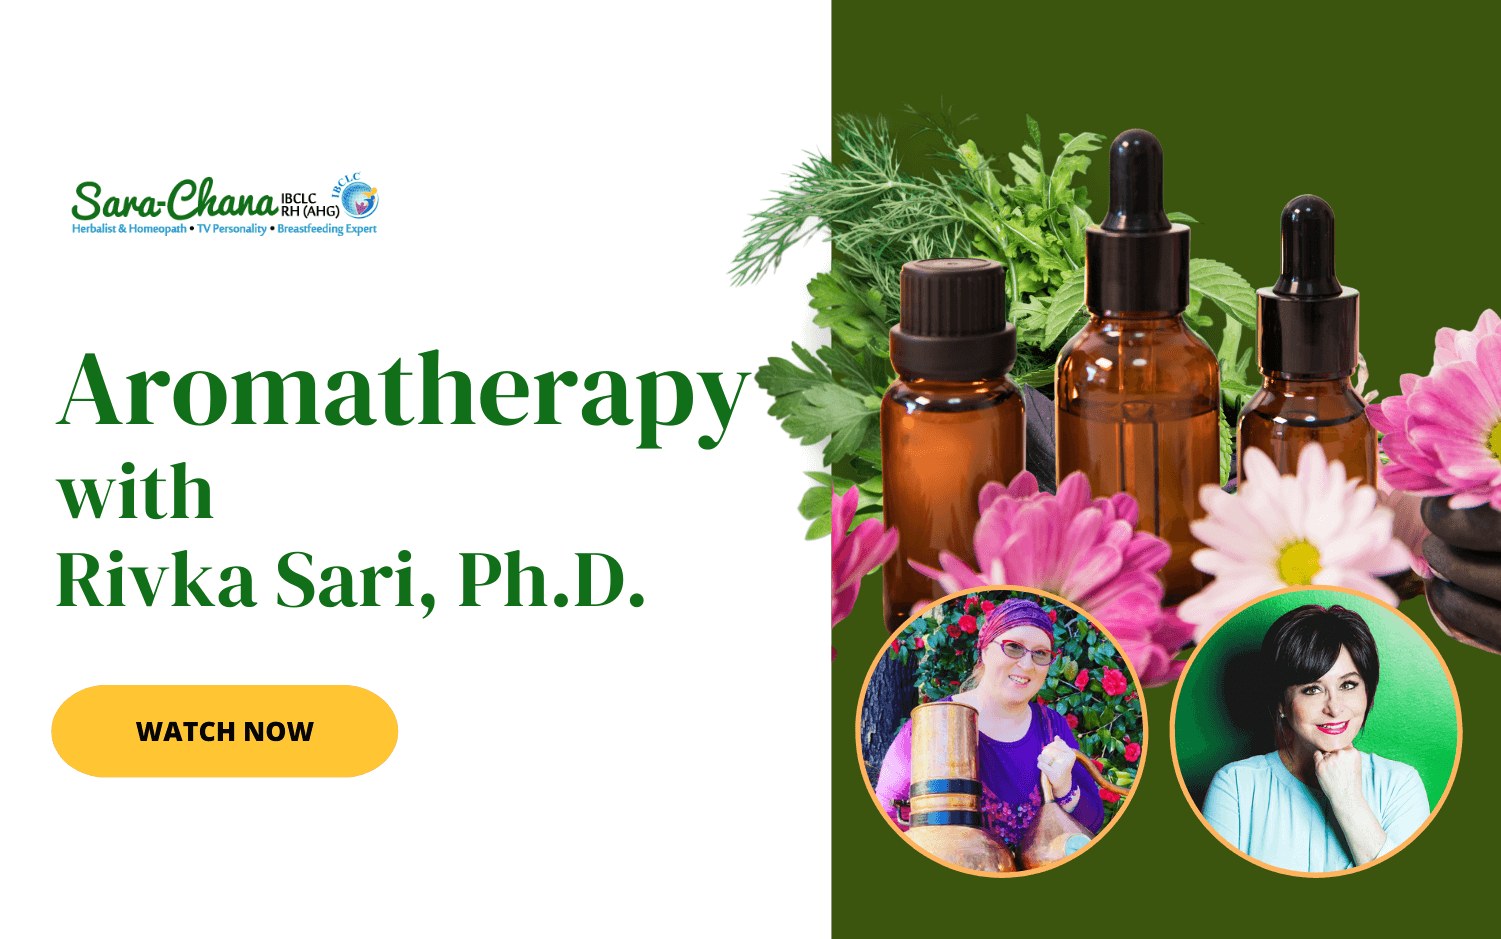 Aromatherapy with guest Rivka Sari, Ph.D.